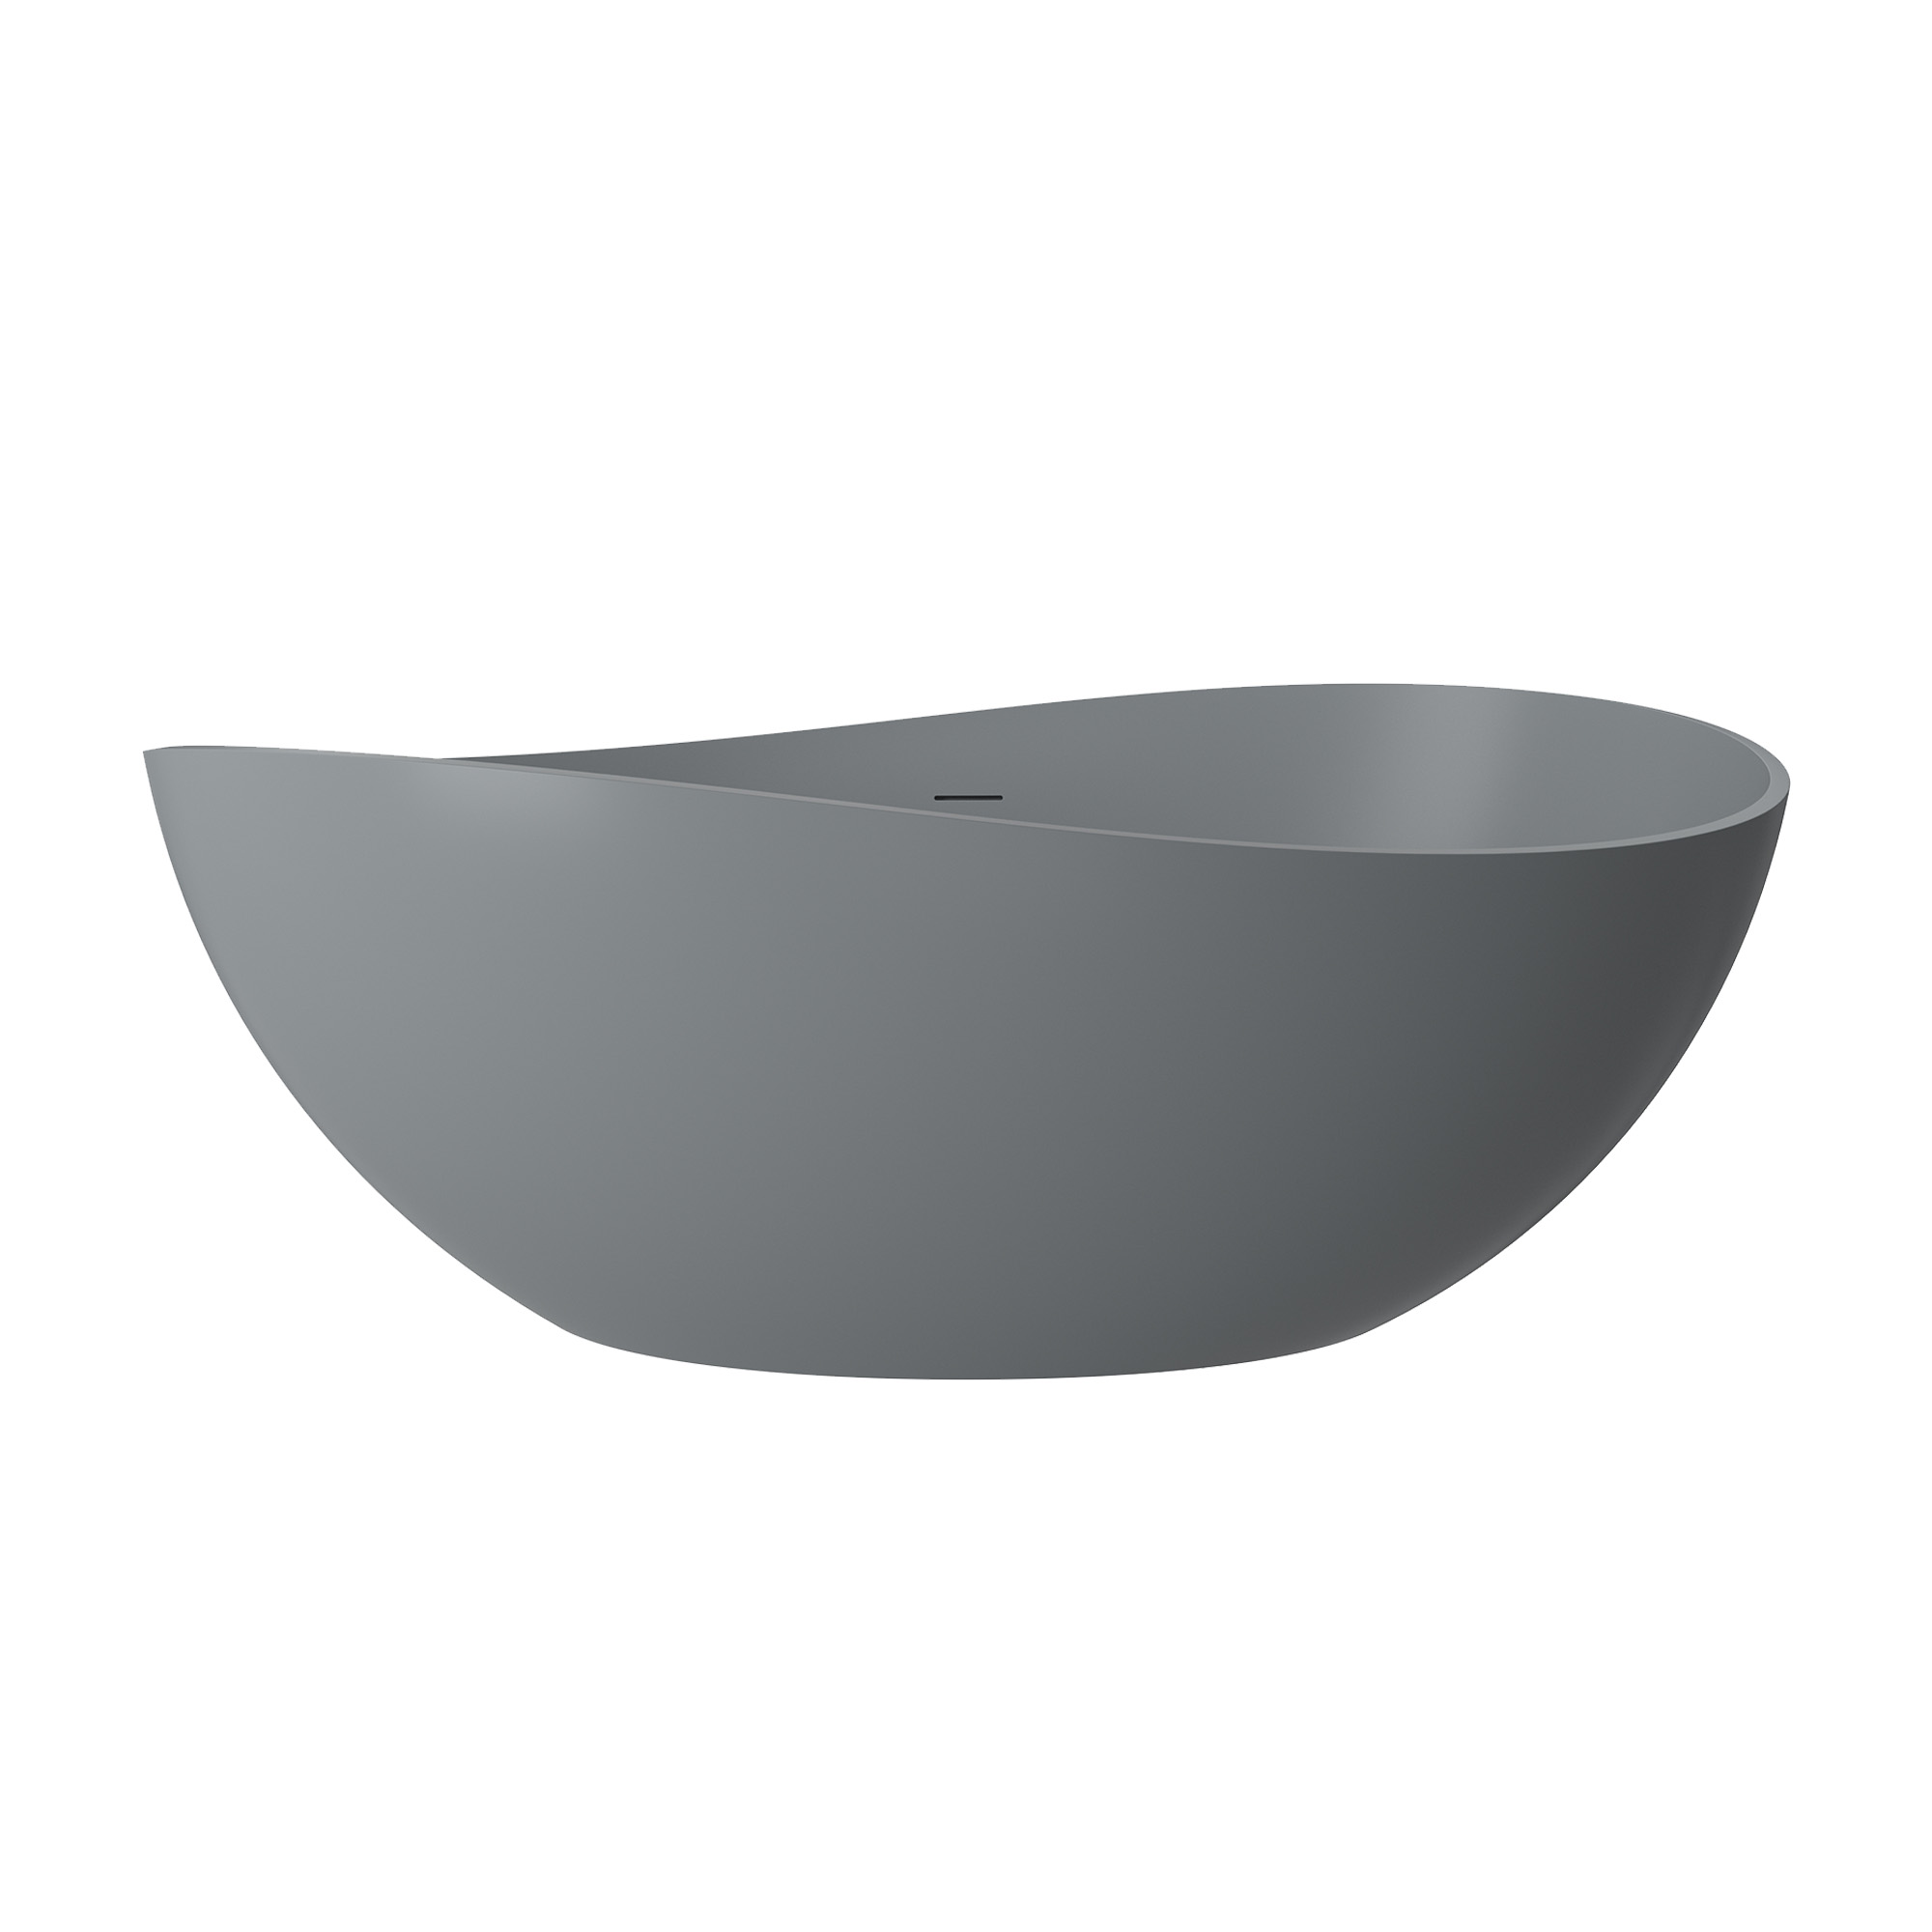 63" Solid Surface Freestanding Bathtub in (MatteBlack&Grey)